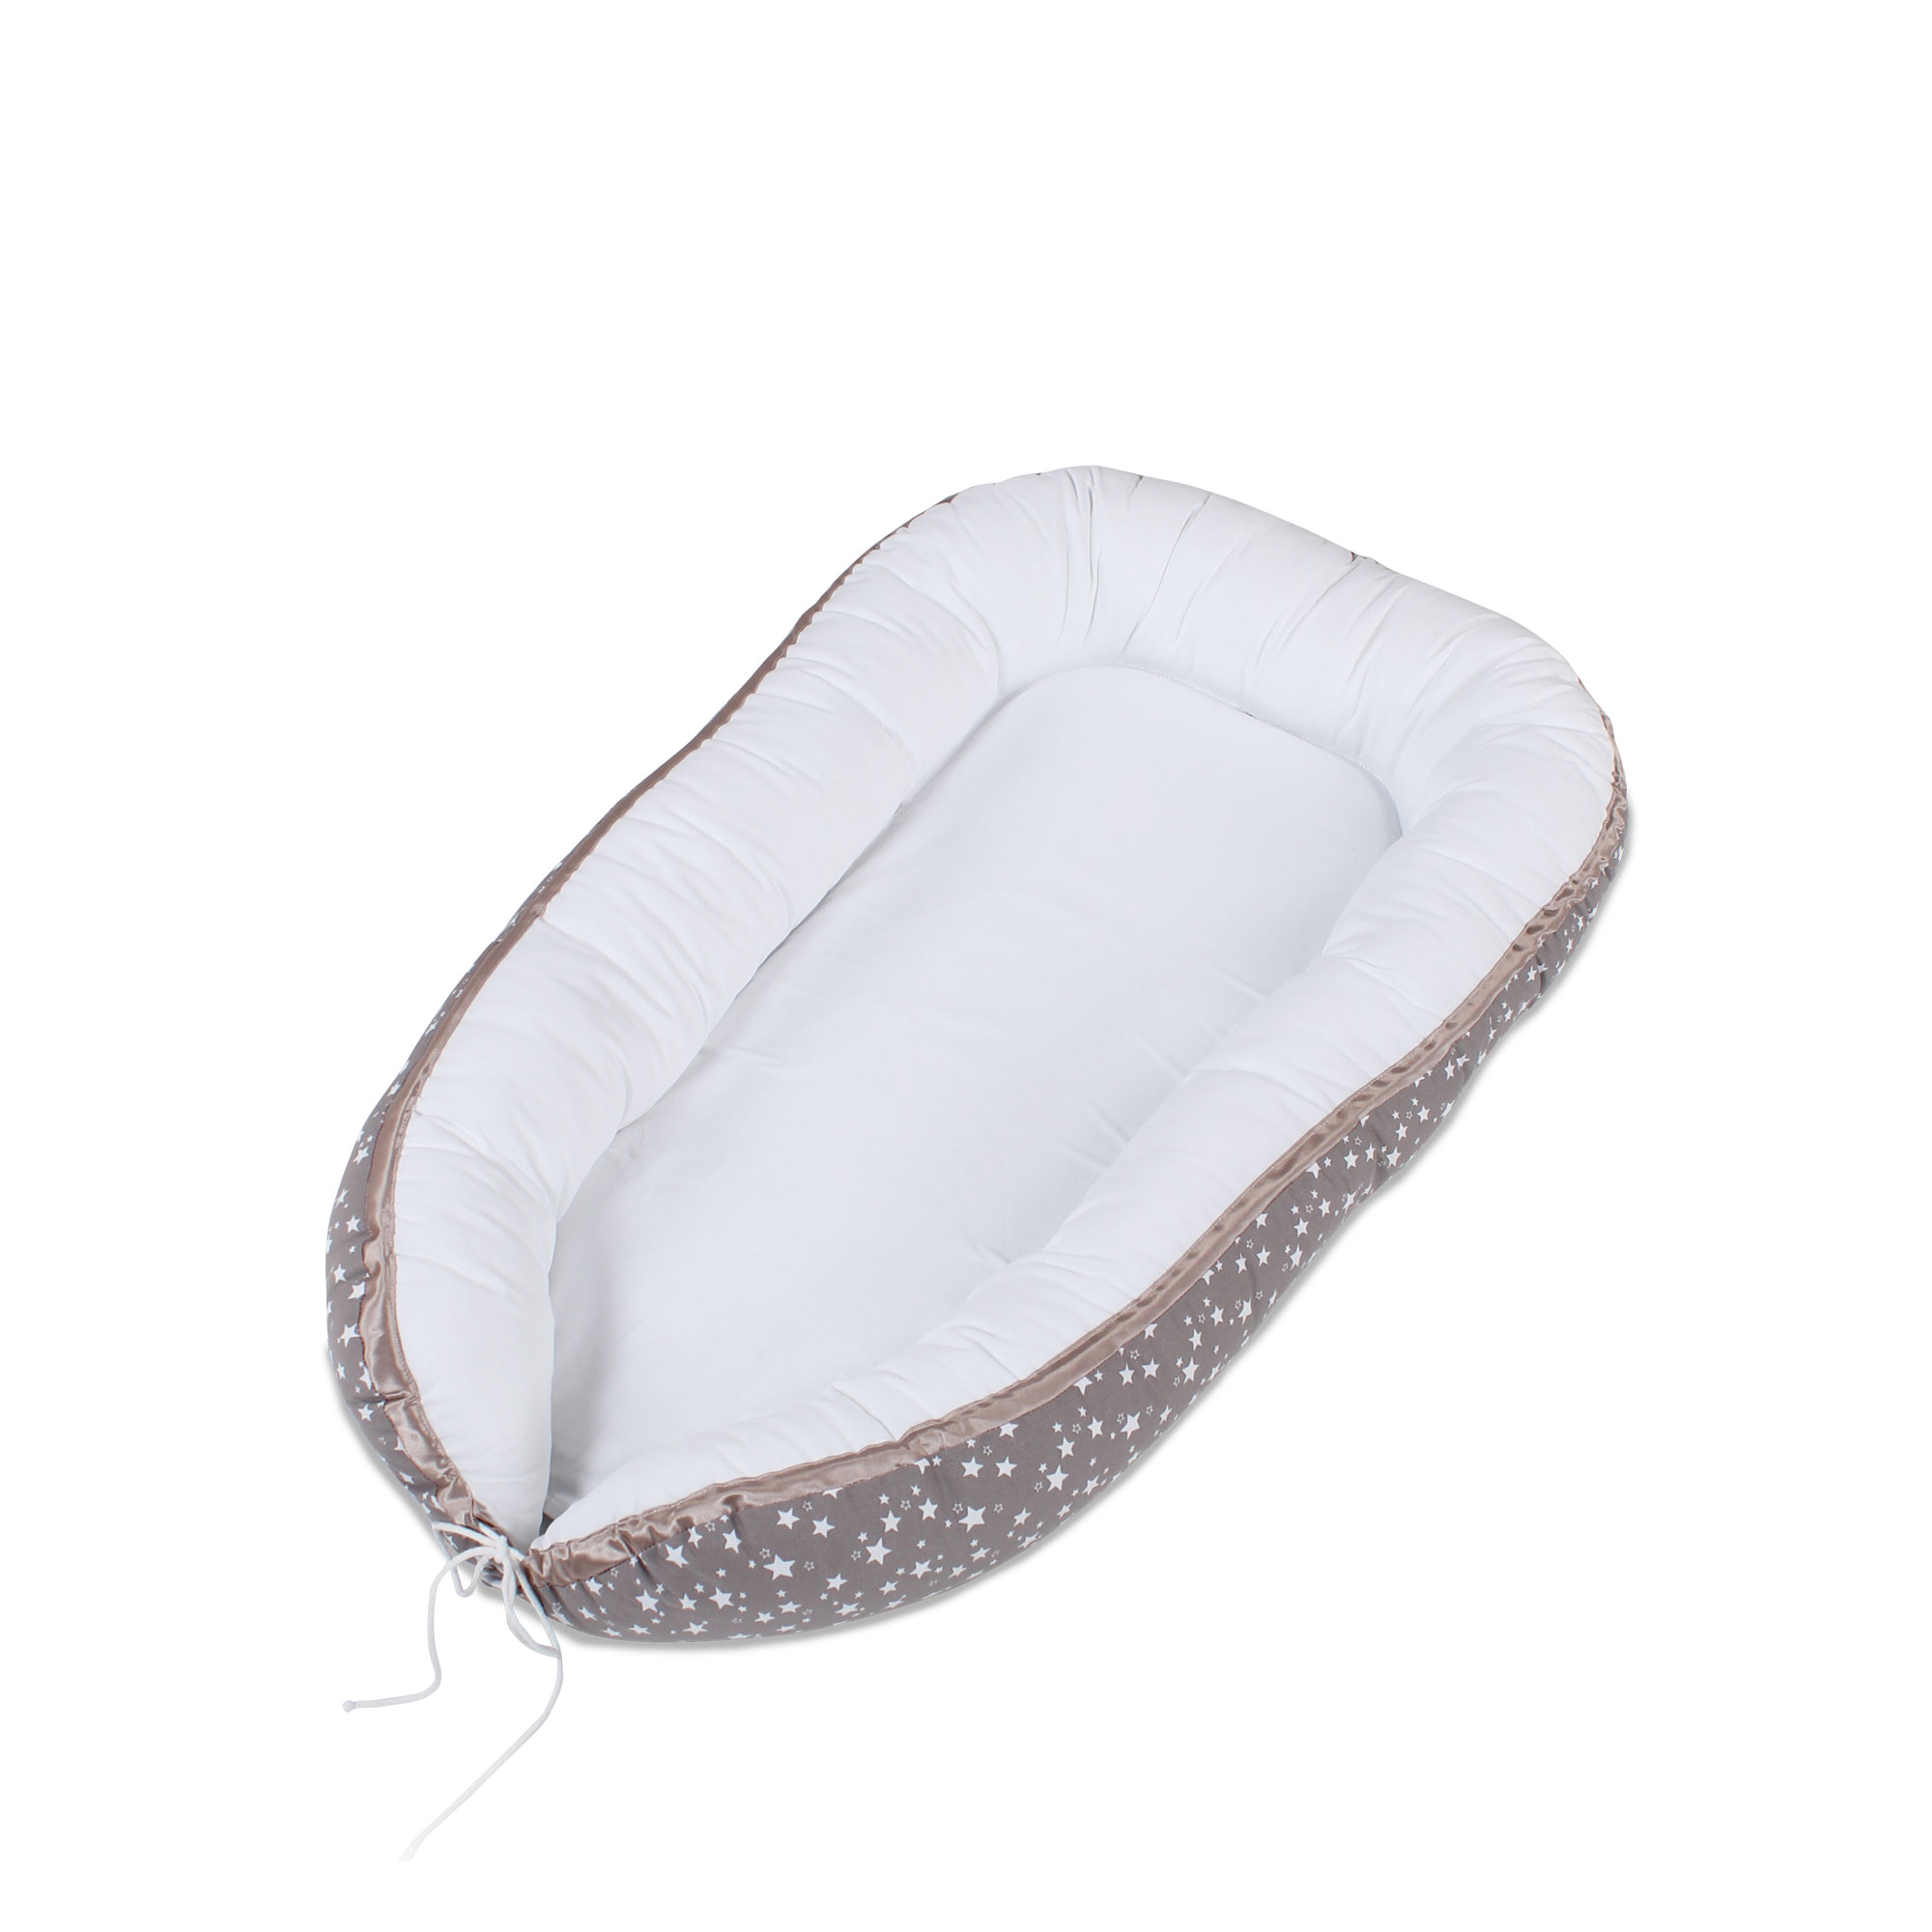 babybay® Drap housse de lit cododo Jersey Deluxe membrane pour